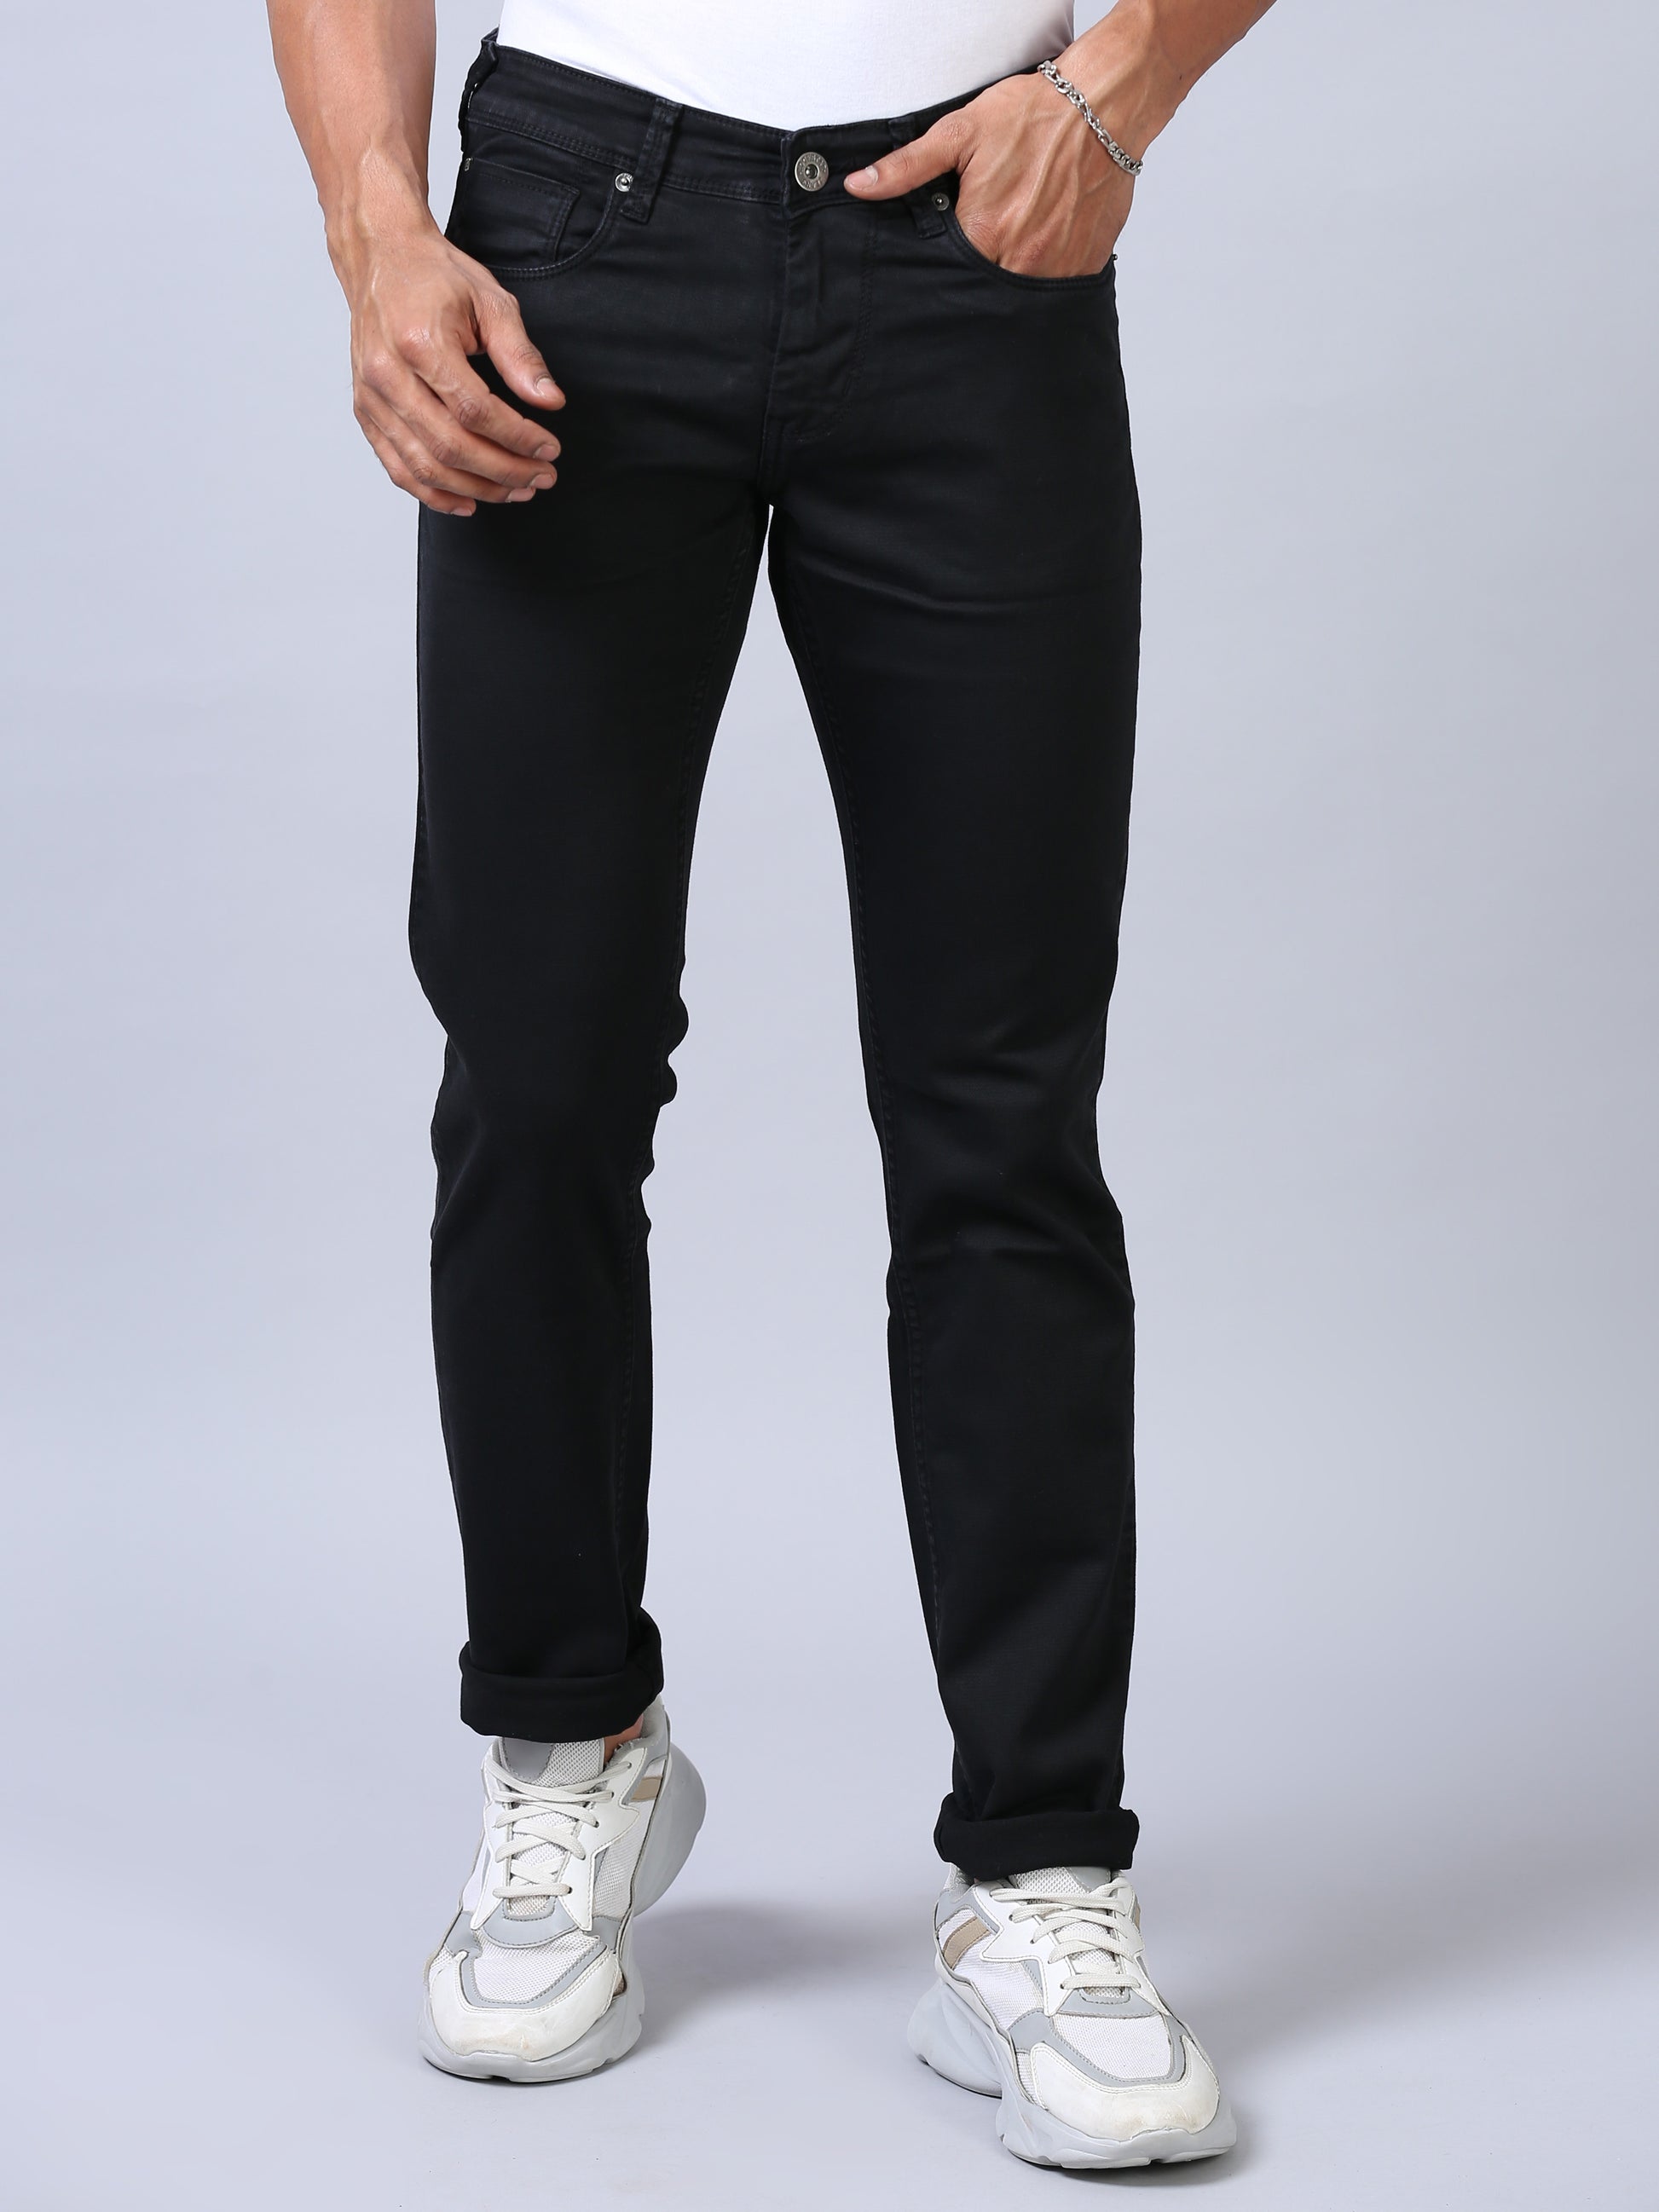 Onyx Black Distressed Denim Jeans for Men